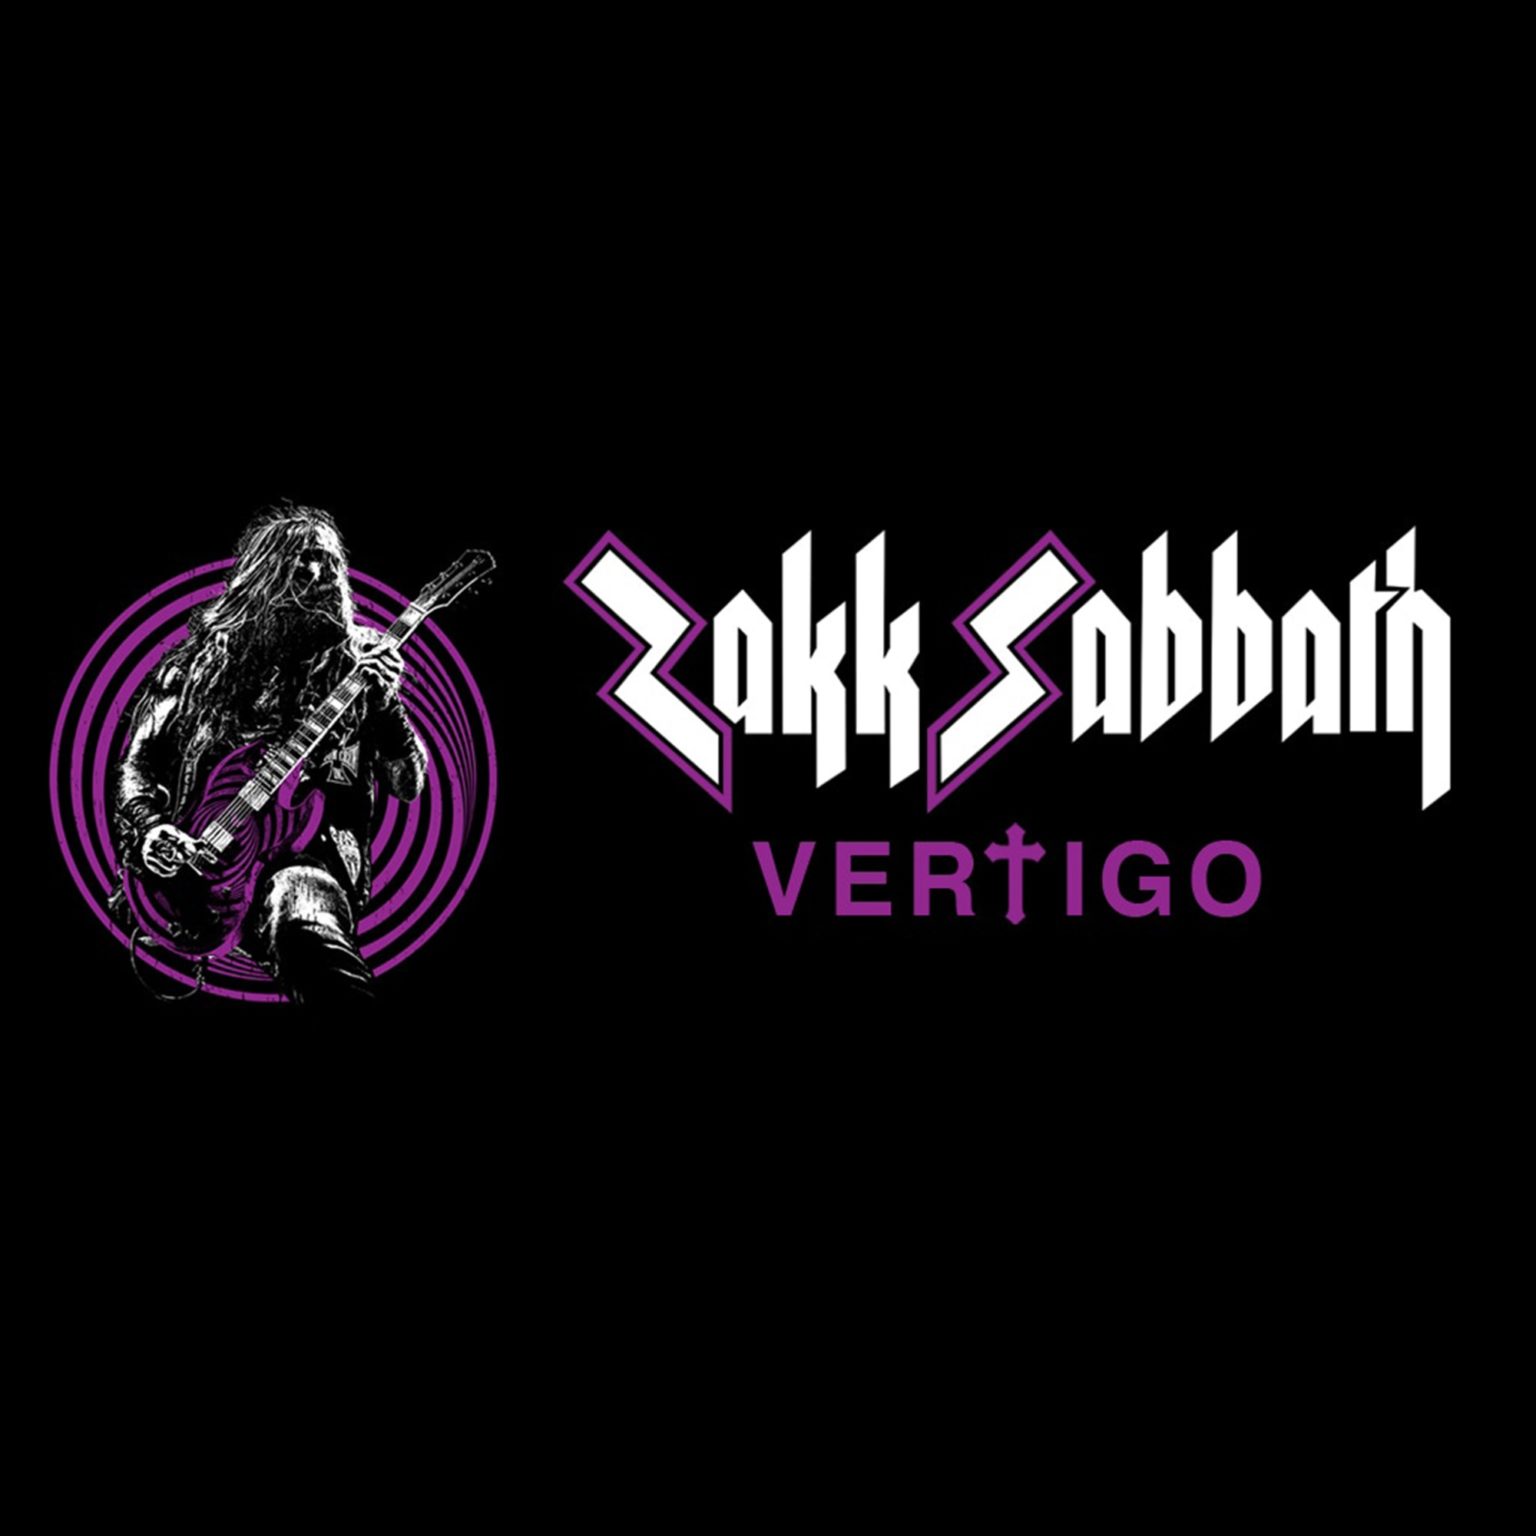 Zakk Sabbath Vertigo Das Album jetzt bei MoreCore.de